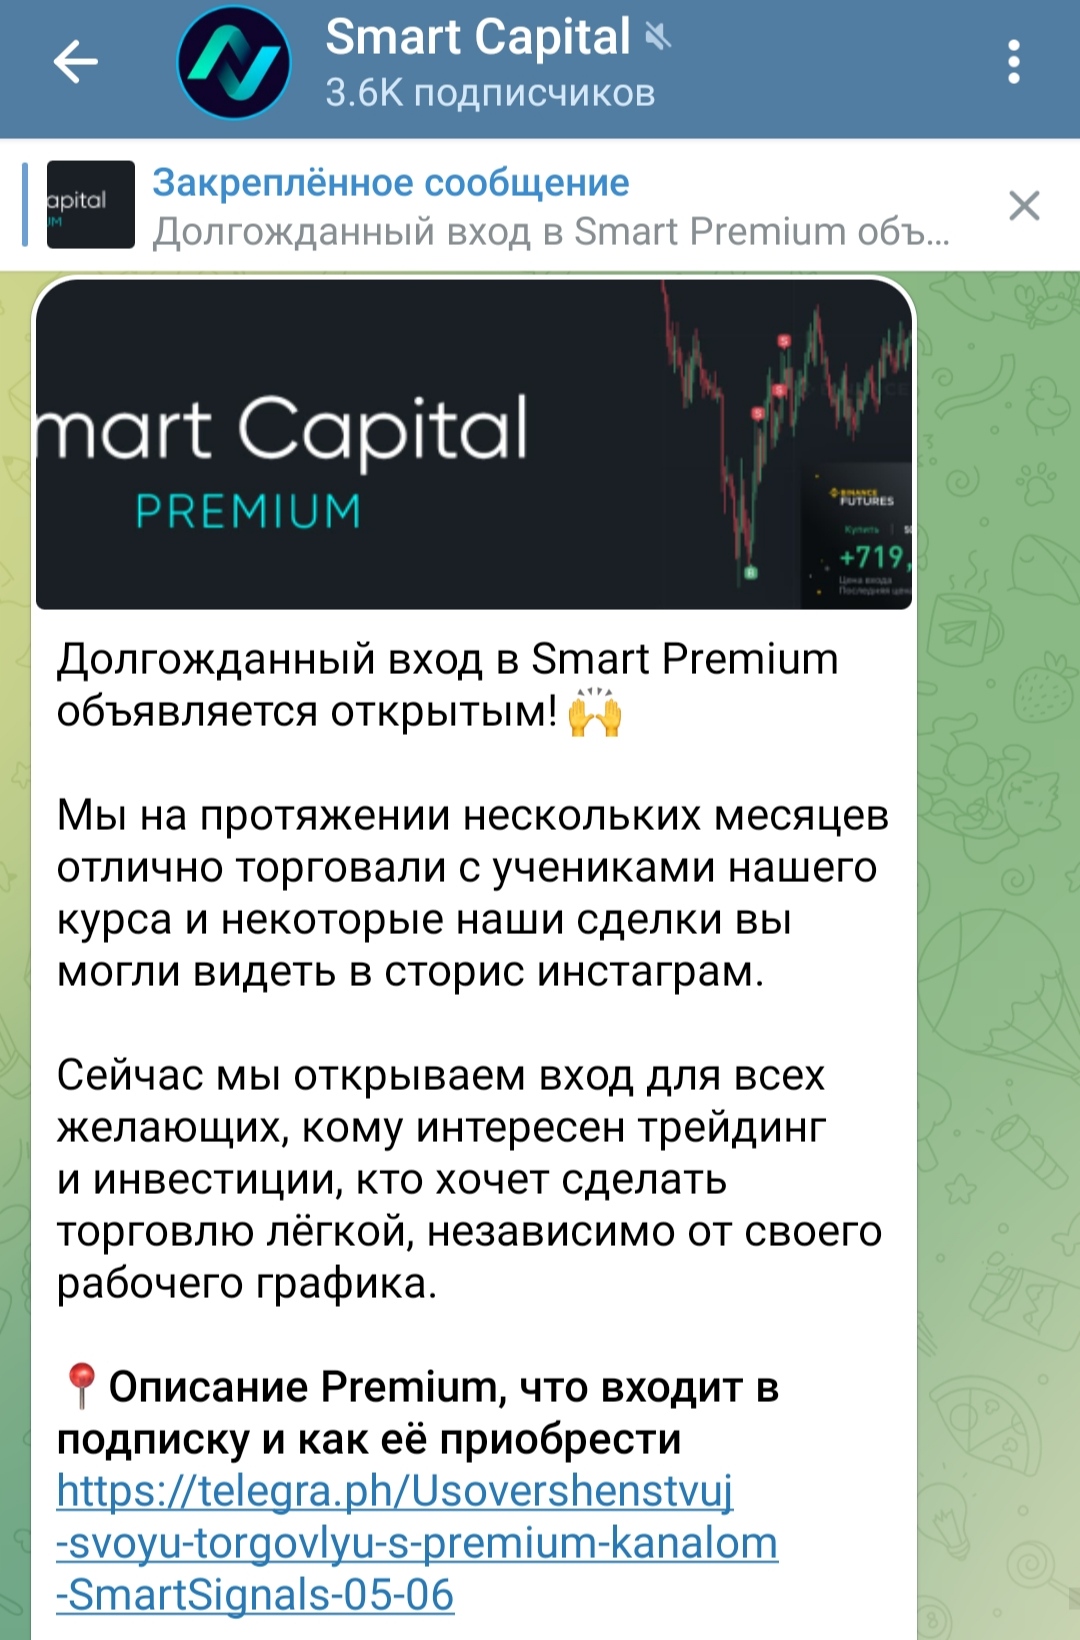 Smart Capital Trading телеграм пост